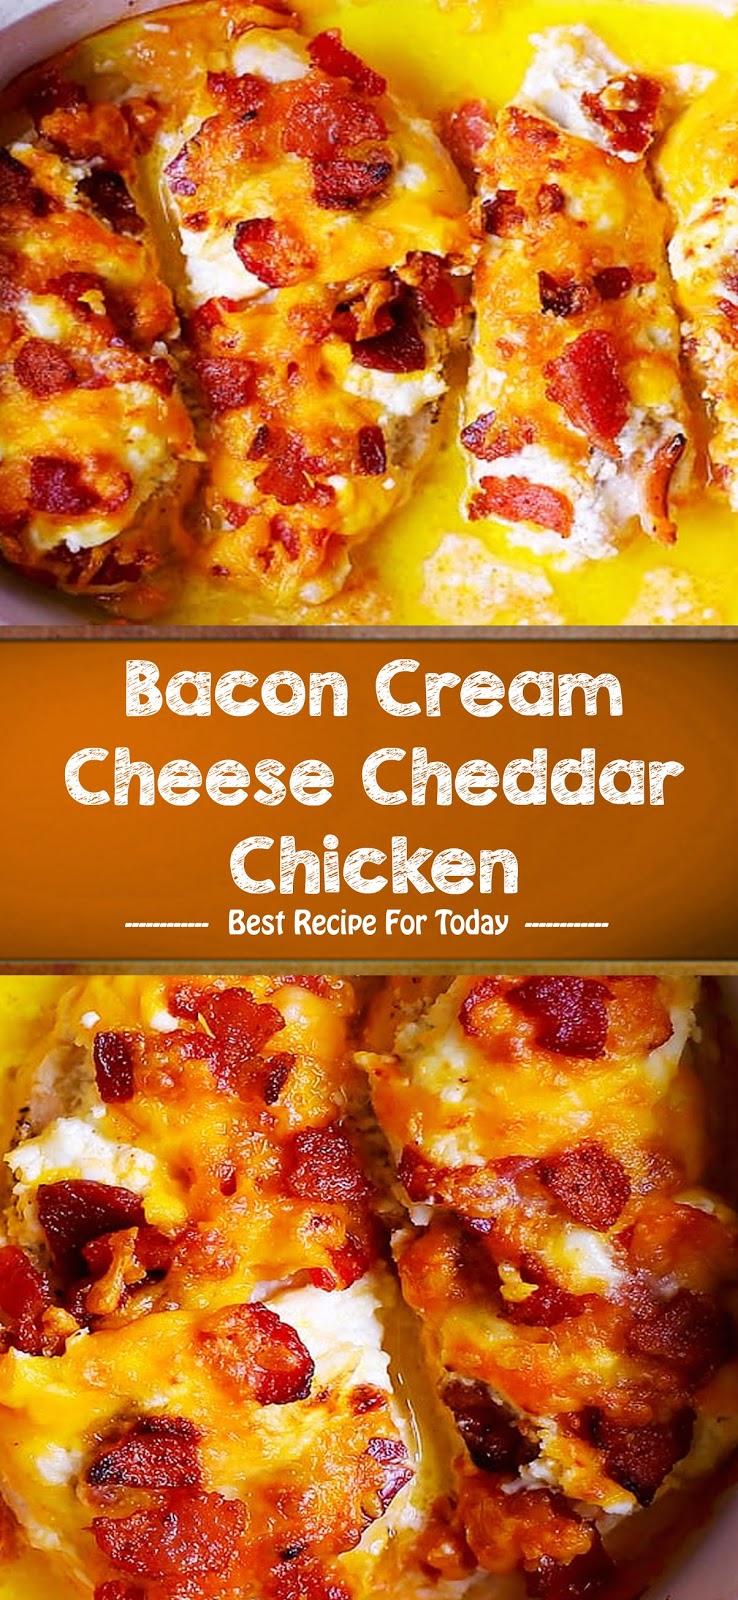 Bacon Cream Cheese Cheddar Chicken - 3 SECONDS